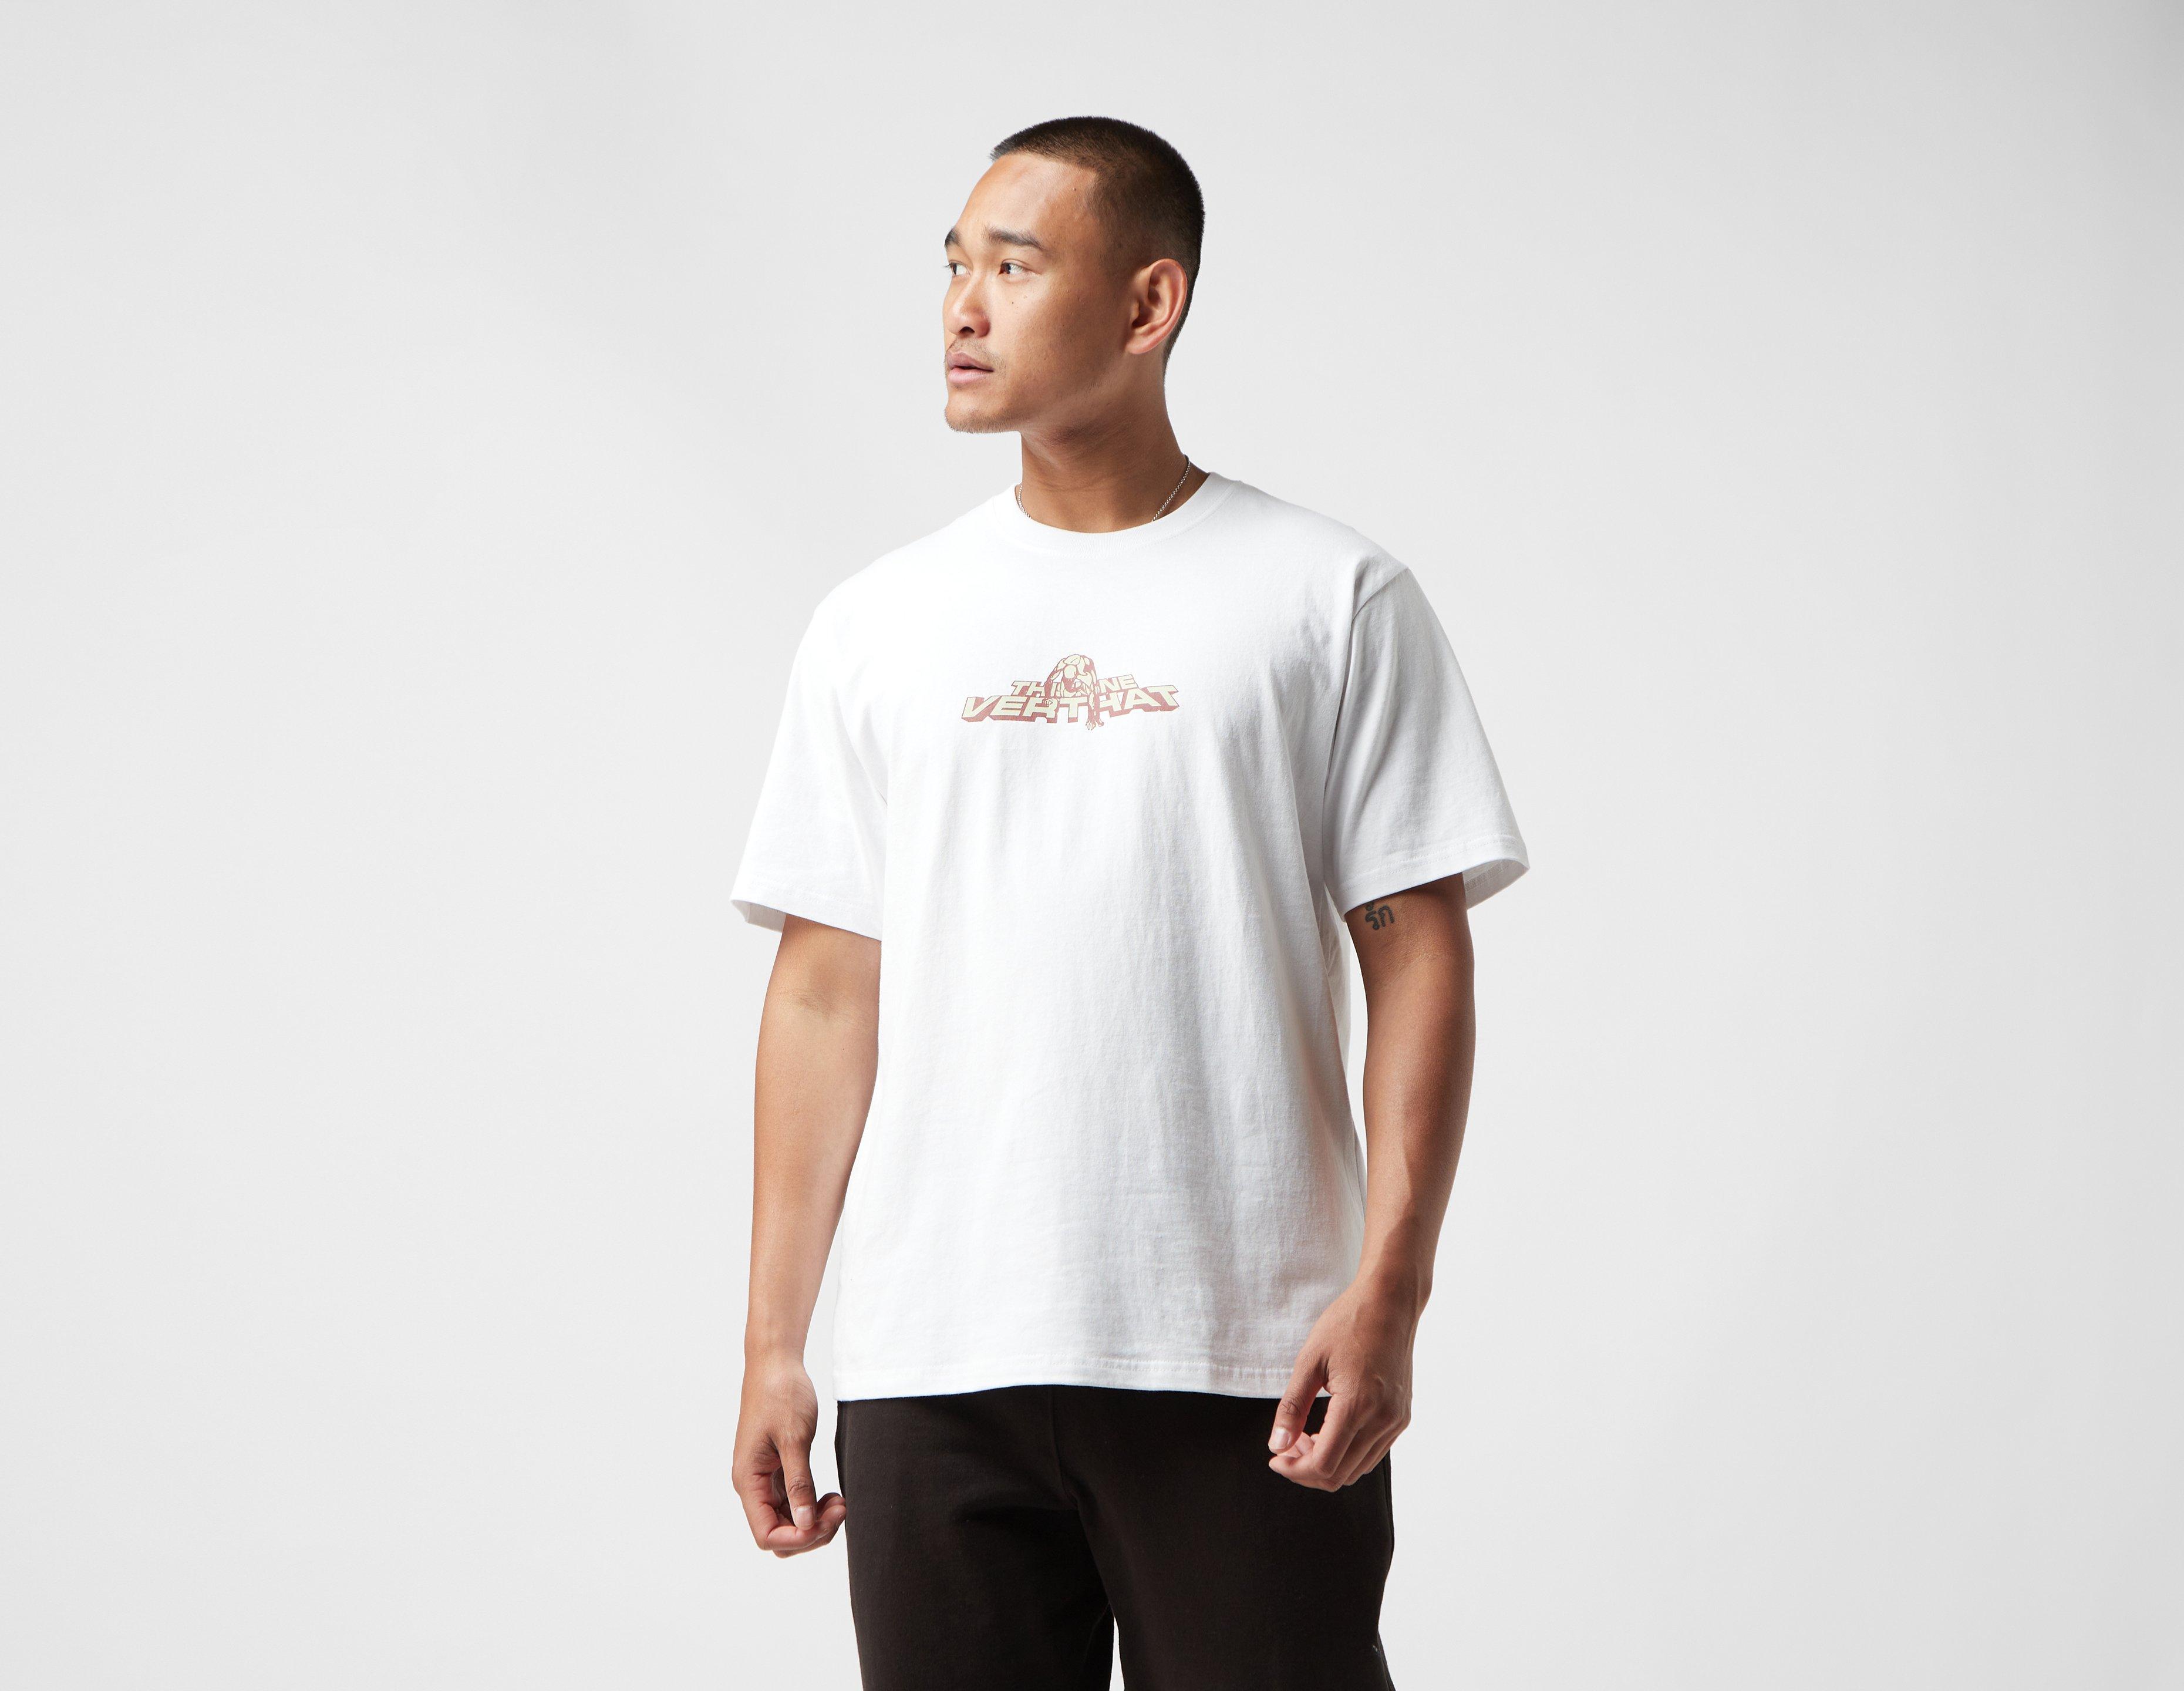 chiaro Thisisneverthat | First lilla - Man HealthdesignShops Shirt White T - pastello Pullover beige